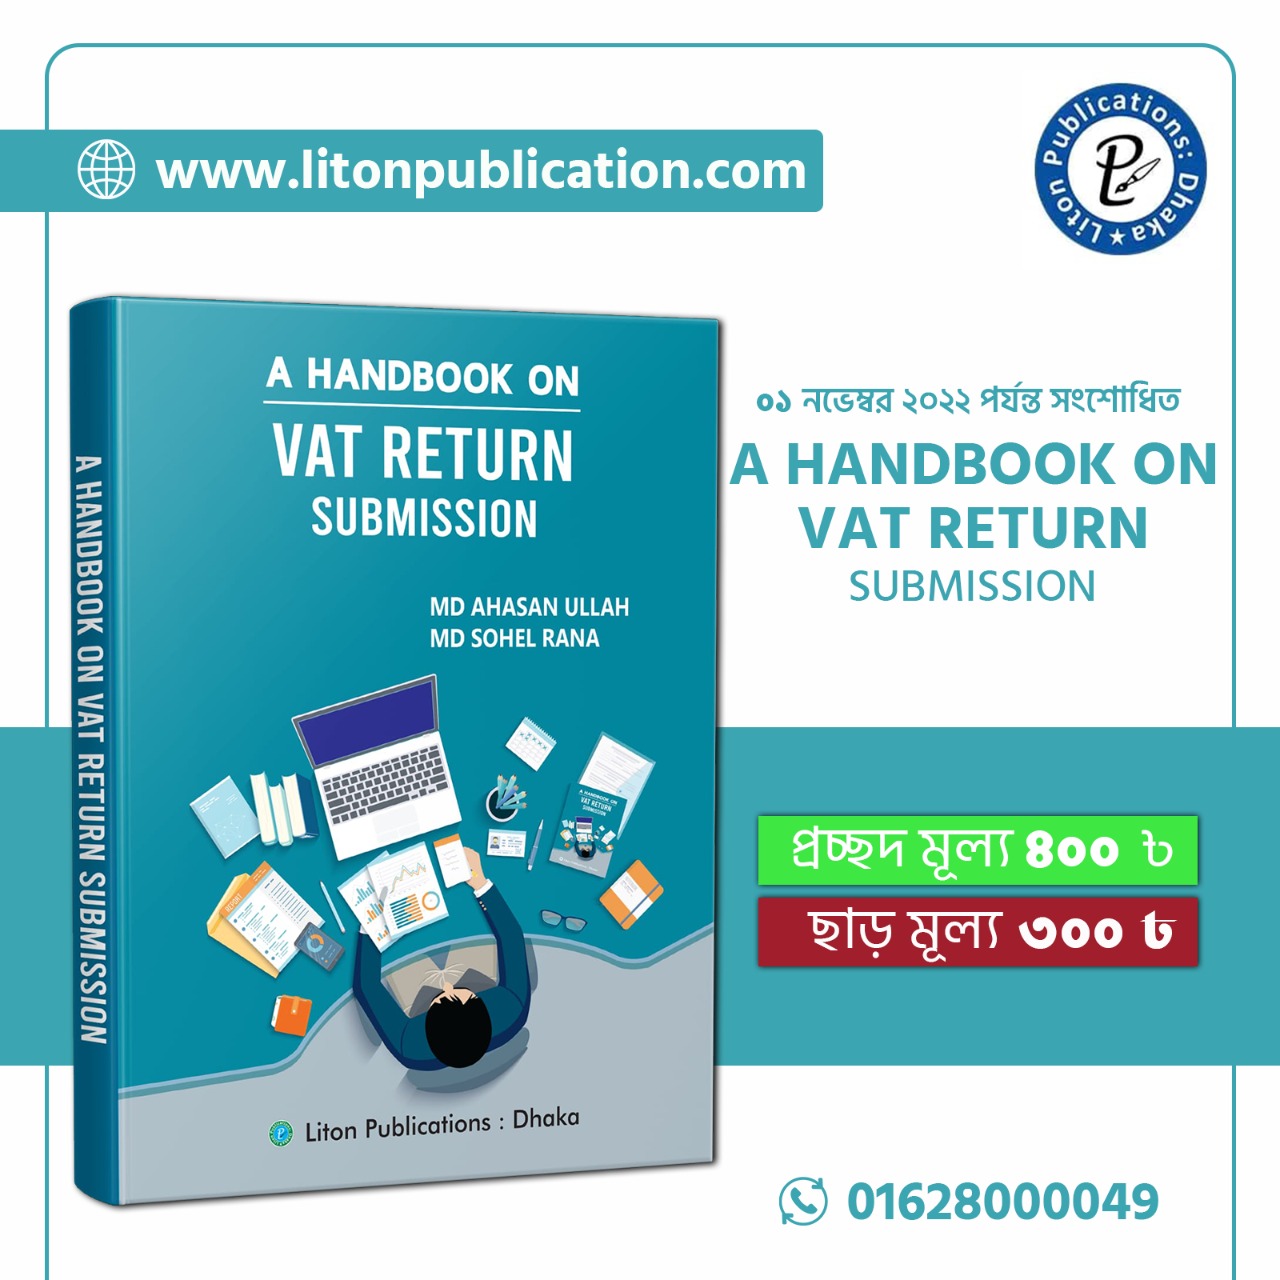 A HANDBOOK ON VAT RETURN SUBMISSION